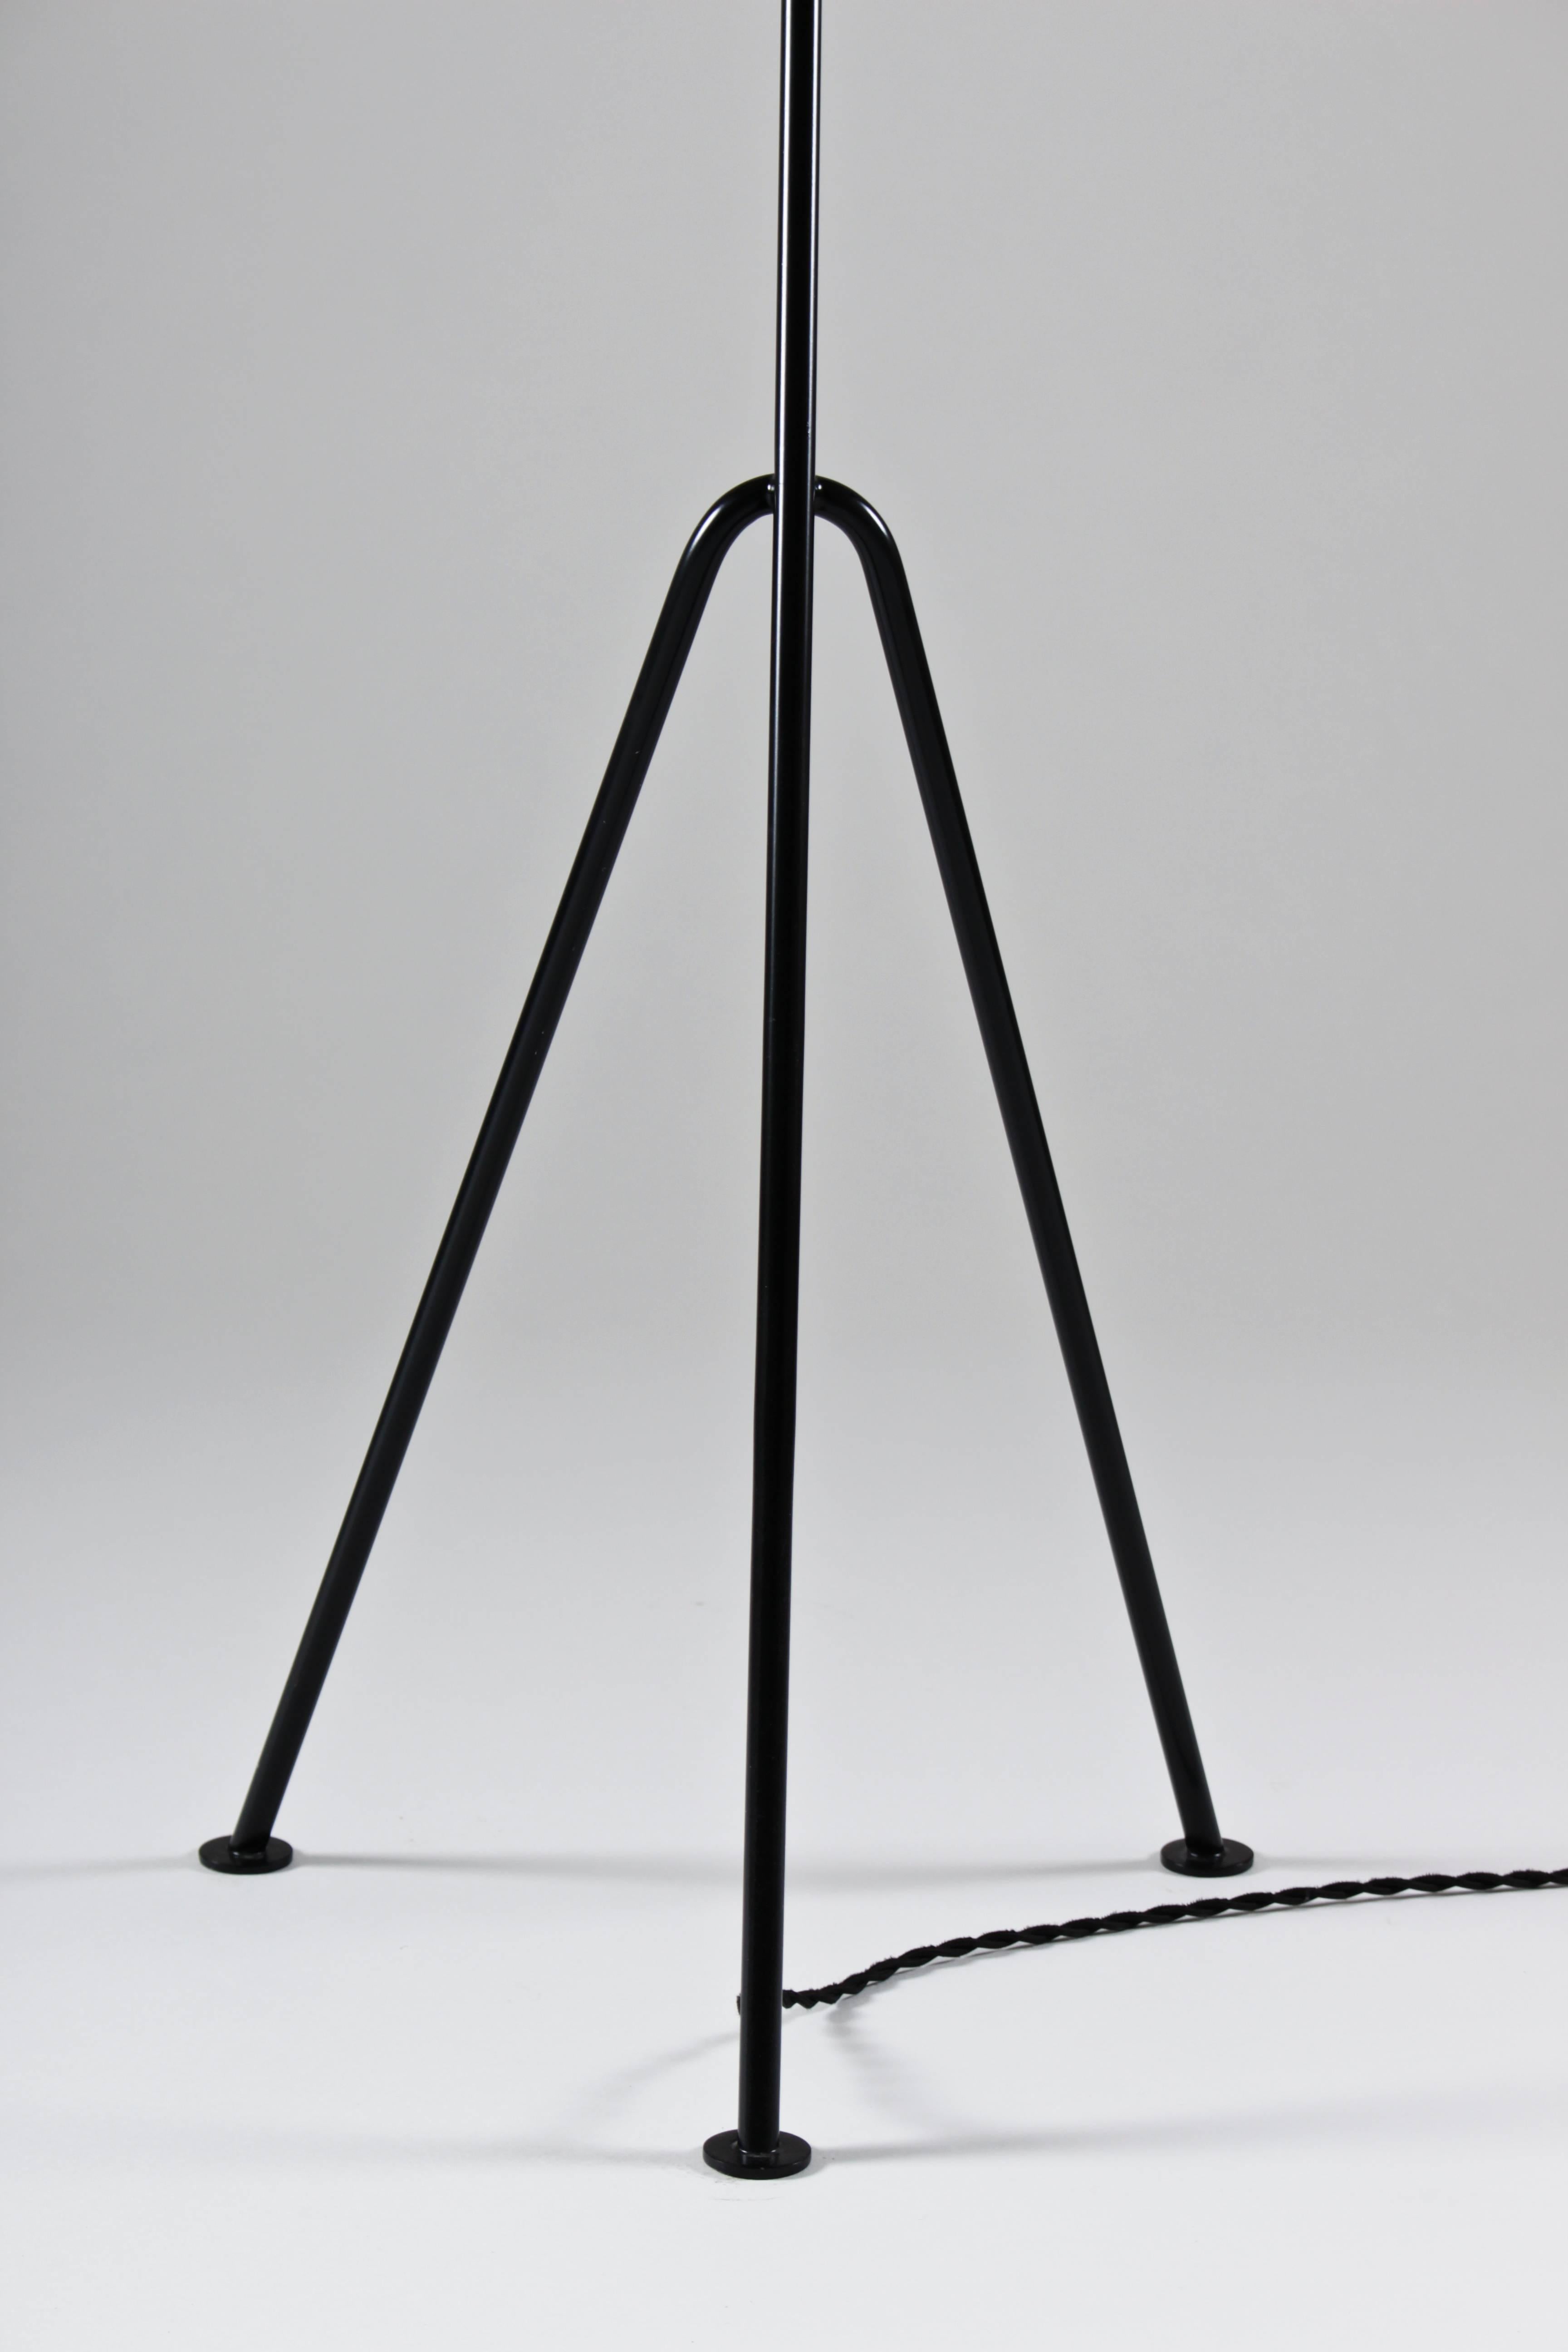 20th Century Grasshopper Floor Lamp by Greta Grossman for Bergboms